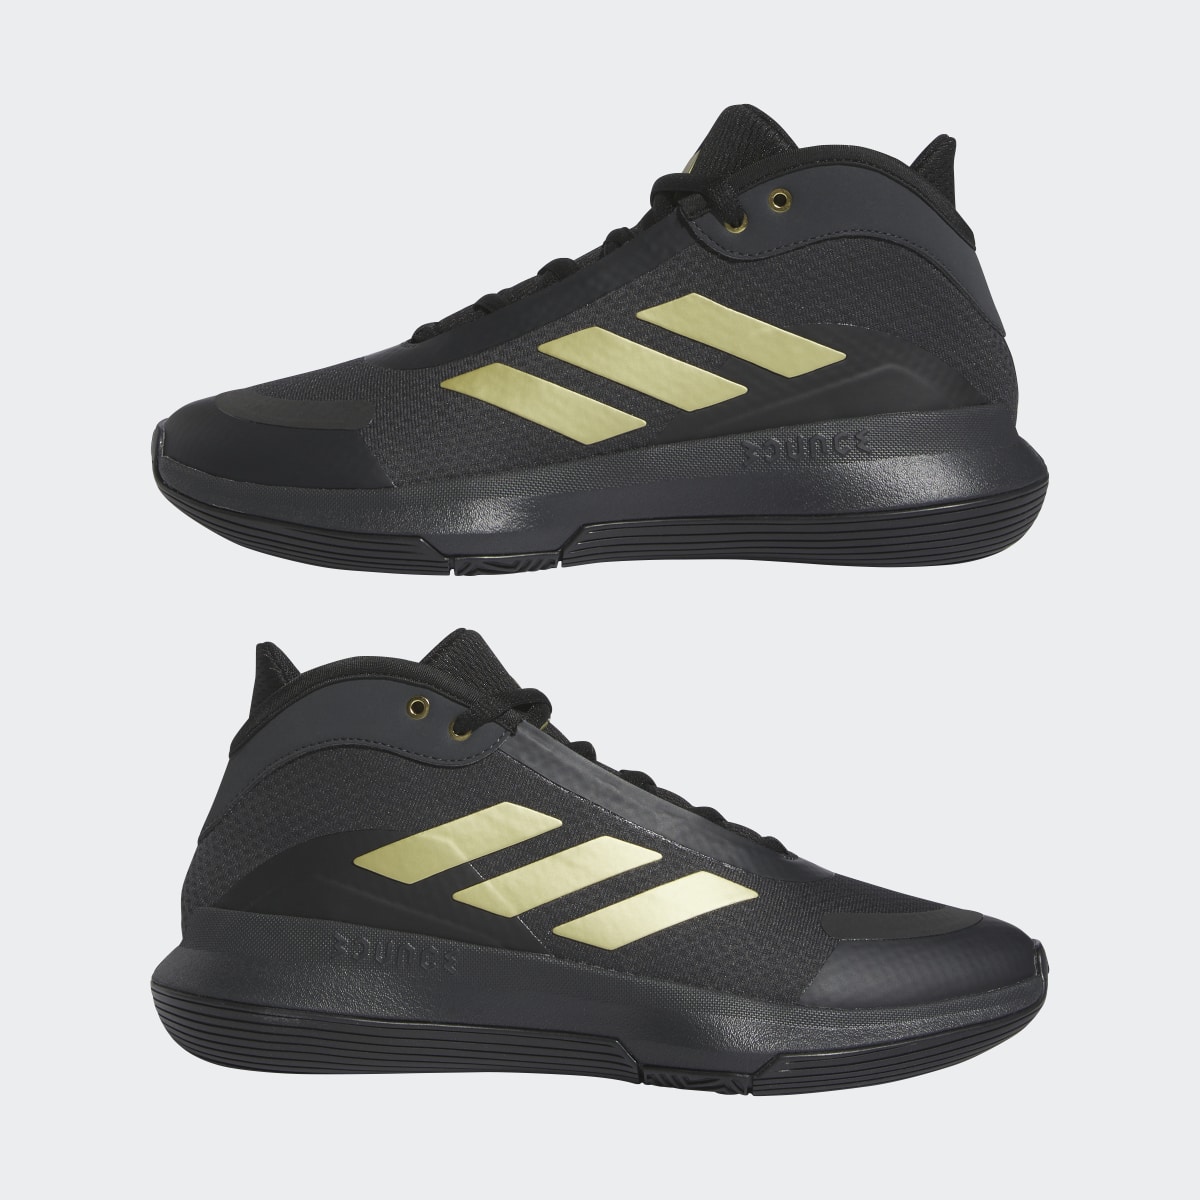 Adidas Bounce Legends Basketball Shoes. 8